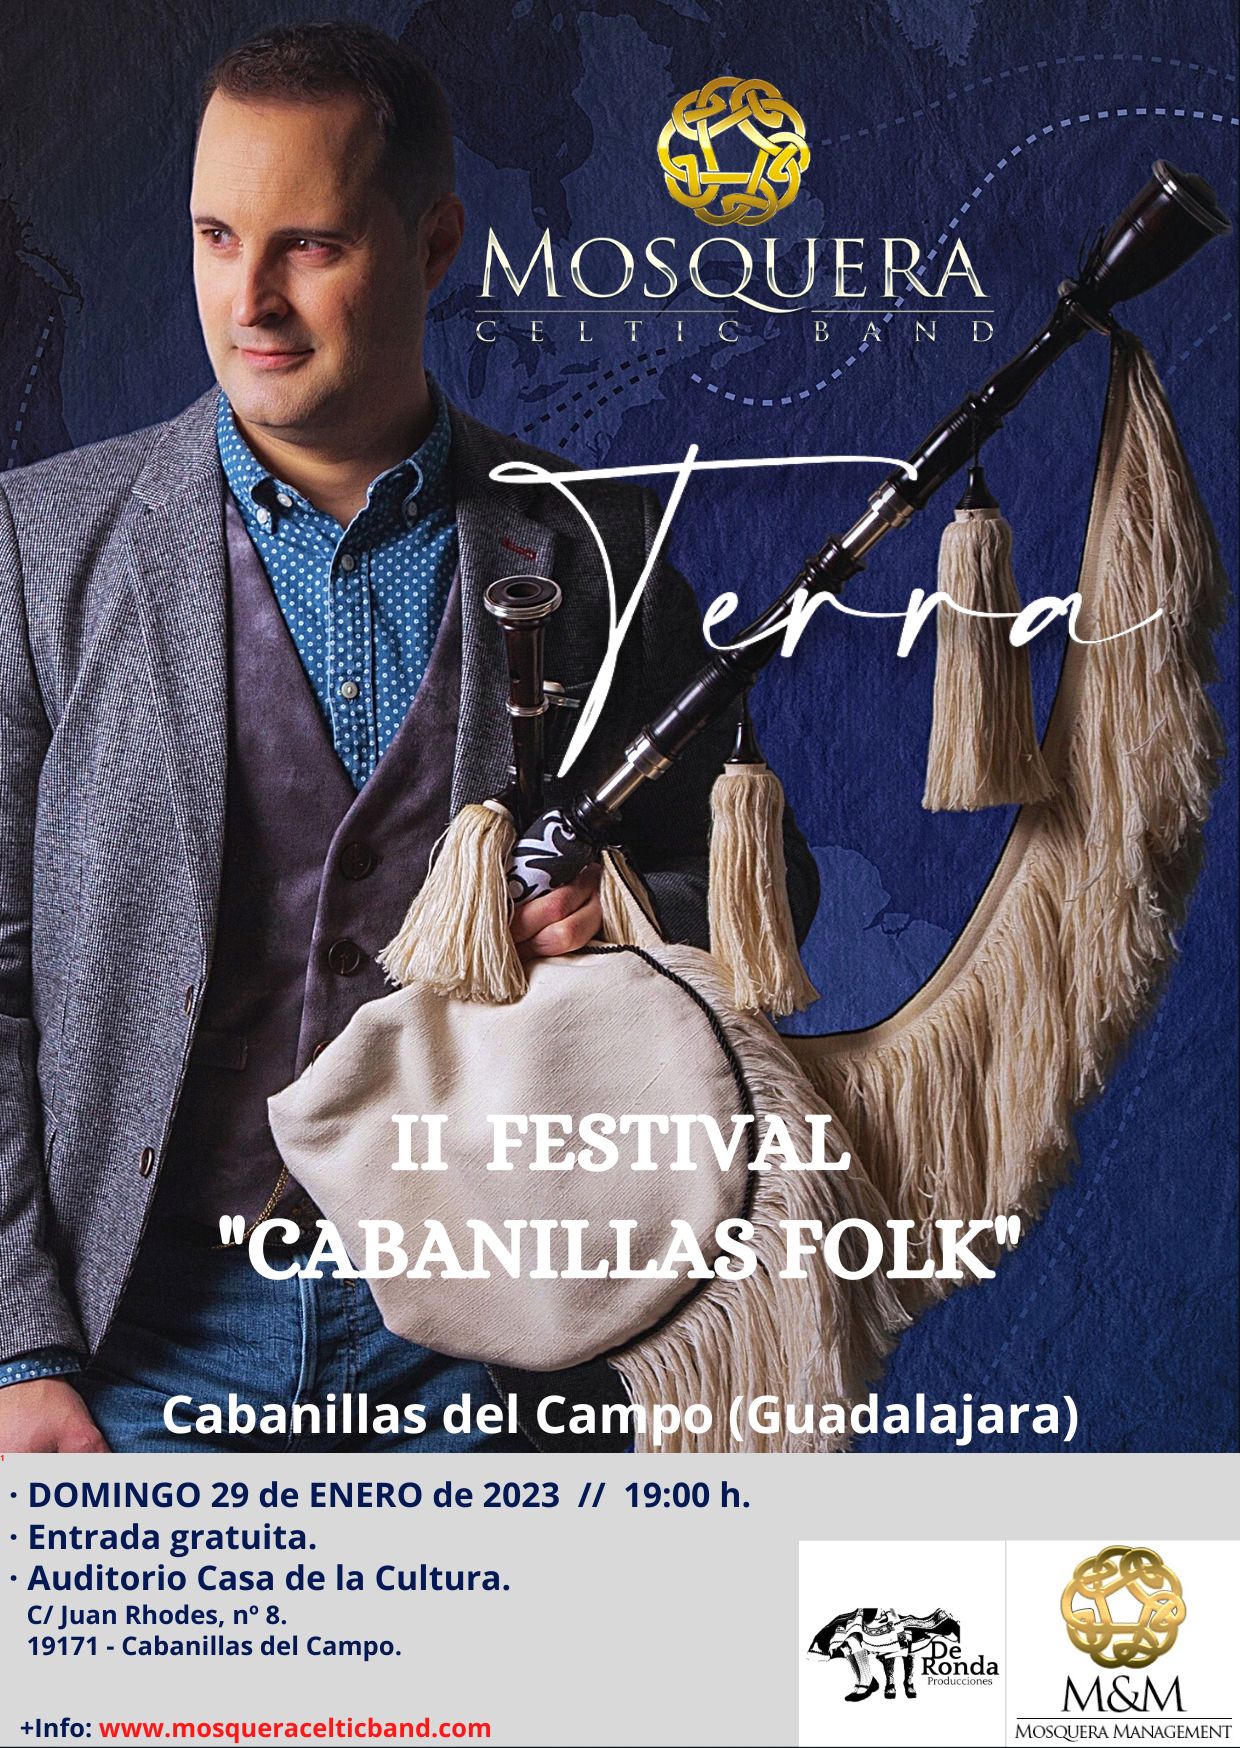 II Festival "Cabanillas Folk" // Cabanillas del Campo (Guadalajara)